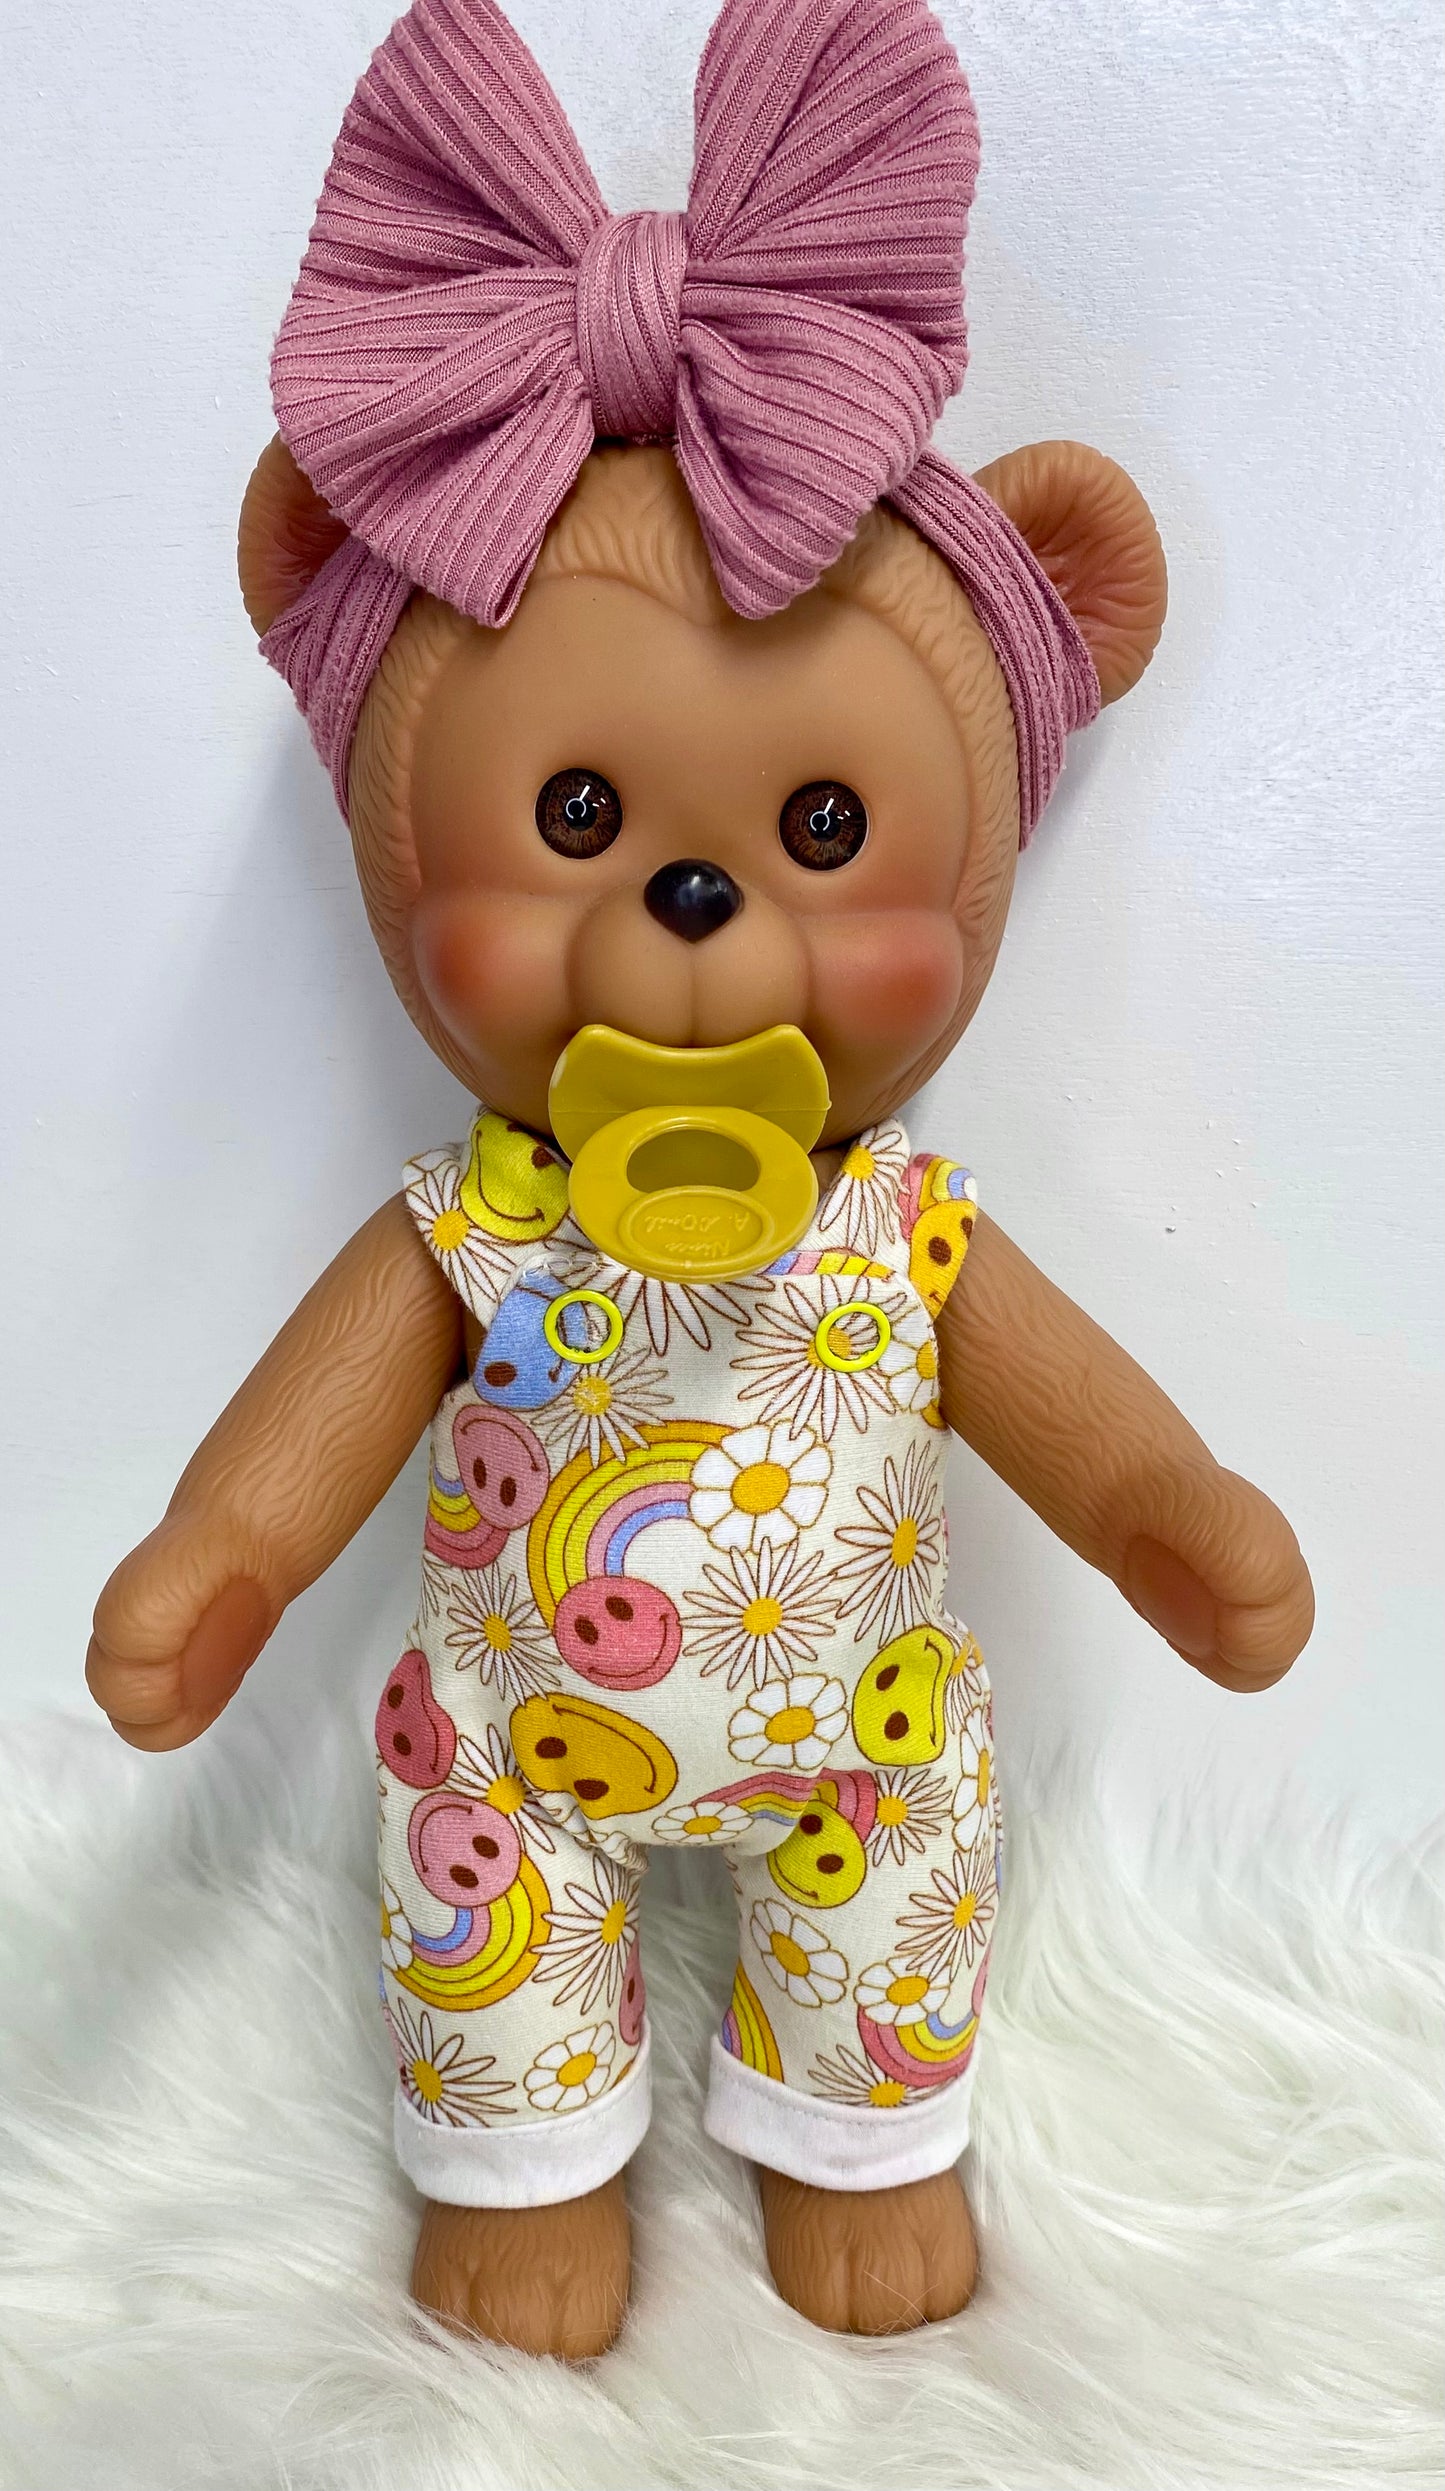 Poppy Bear In Handmade Outfit